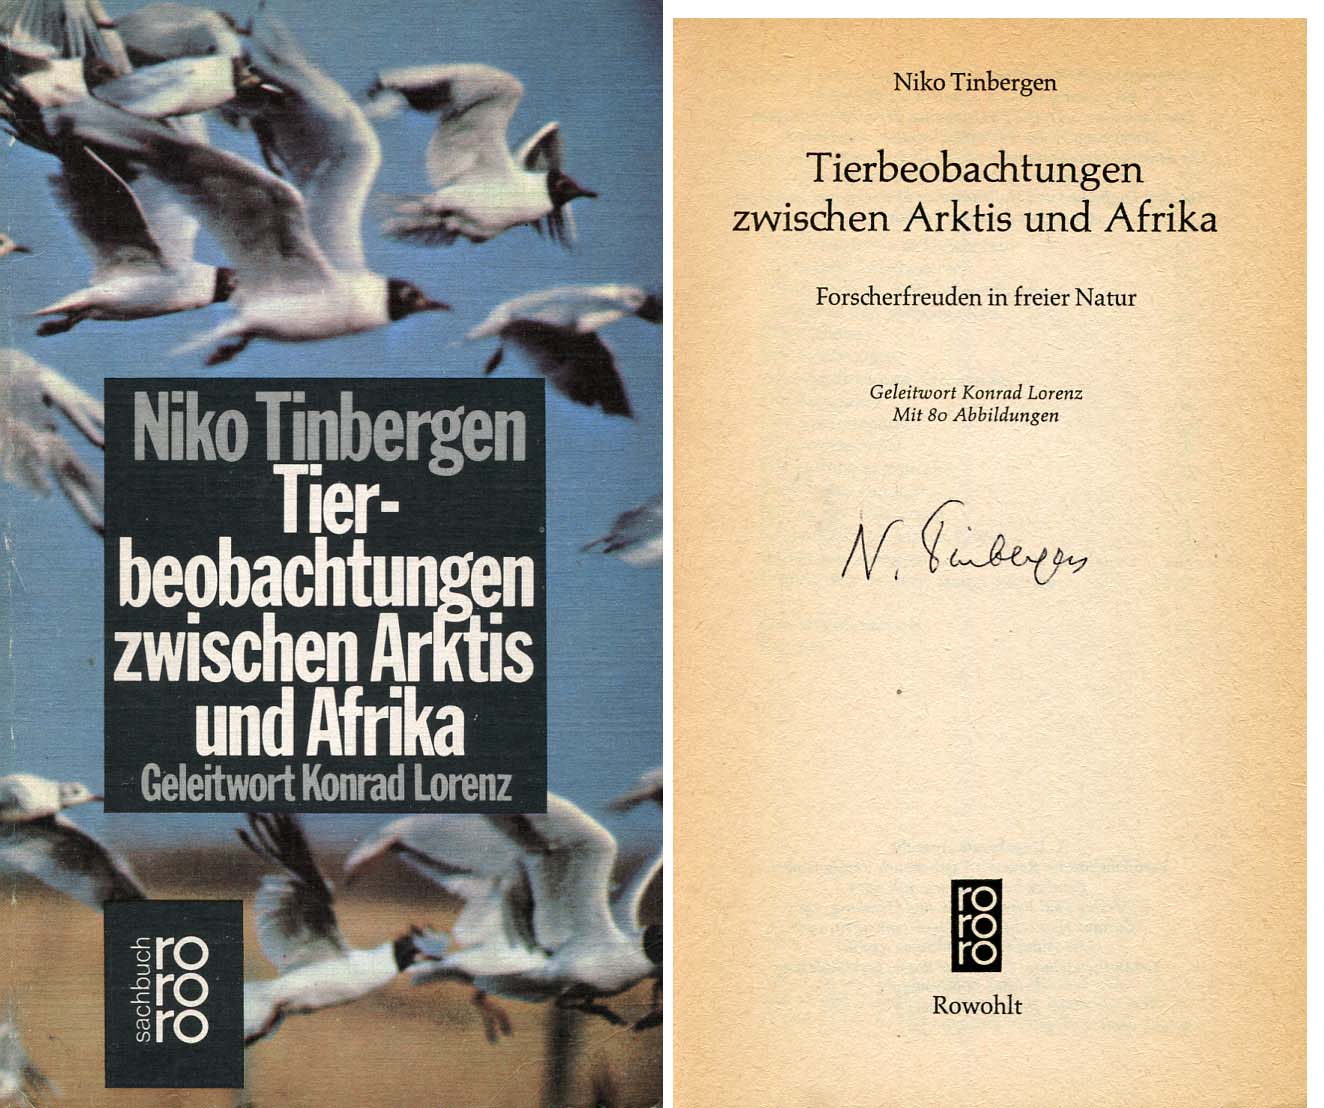 Niko Tinbergen Autograph Autogramm | ID 6962111971477